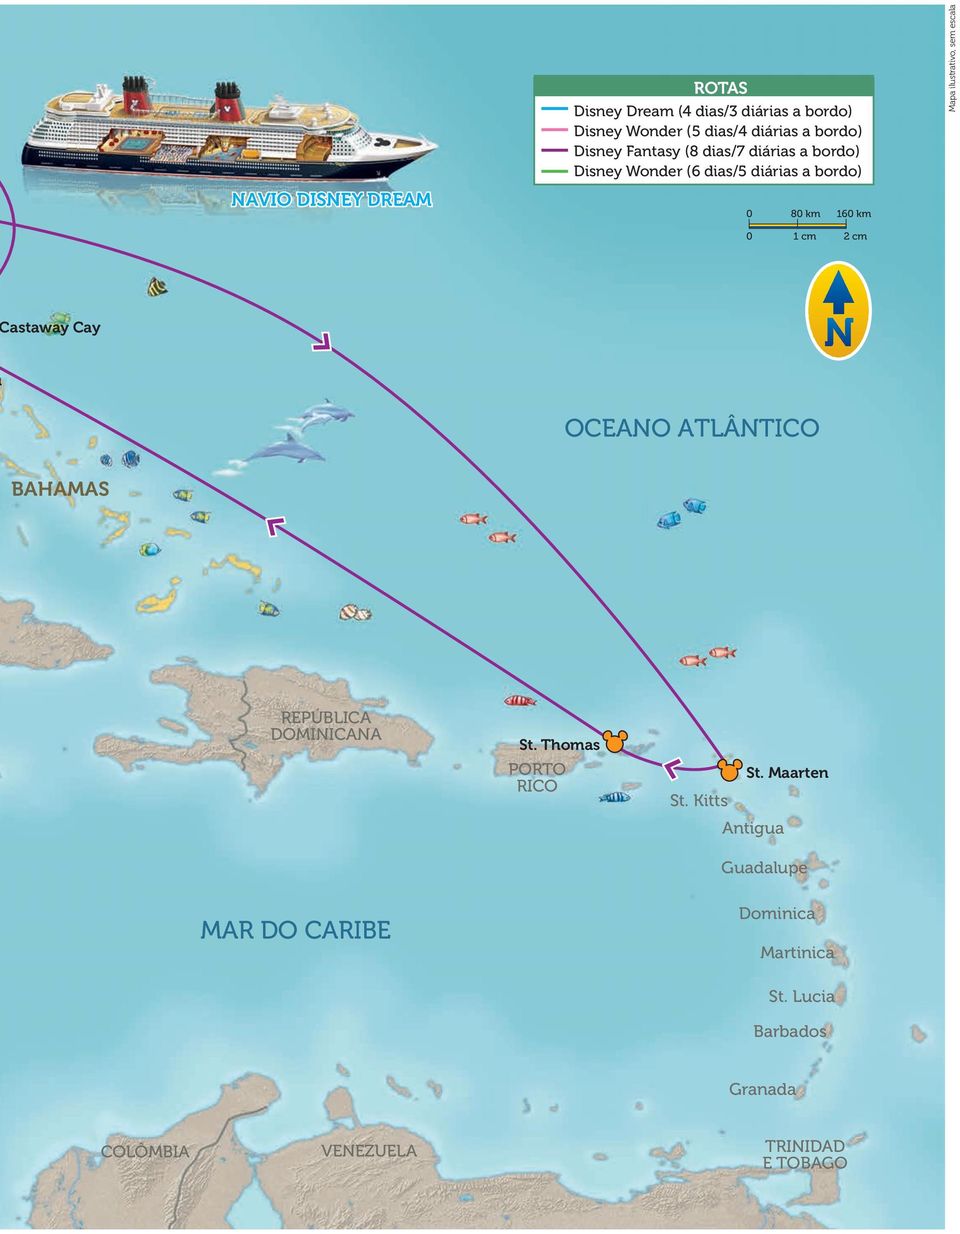 ilustrativo, sem escala astaway Cay OCEANO ATLÂNTICO BAHAMAS REPÚBLICA DOMINICANA St. Thomas PORTO RICO St.